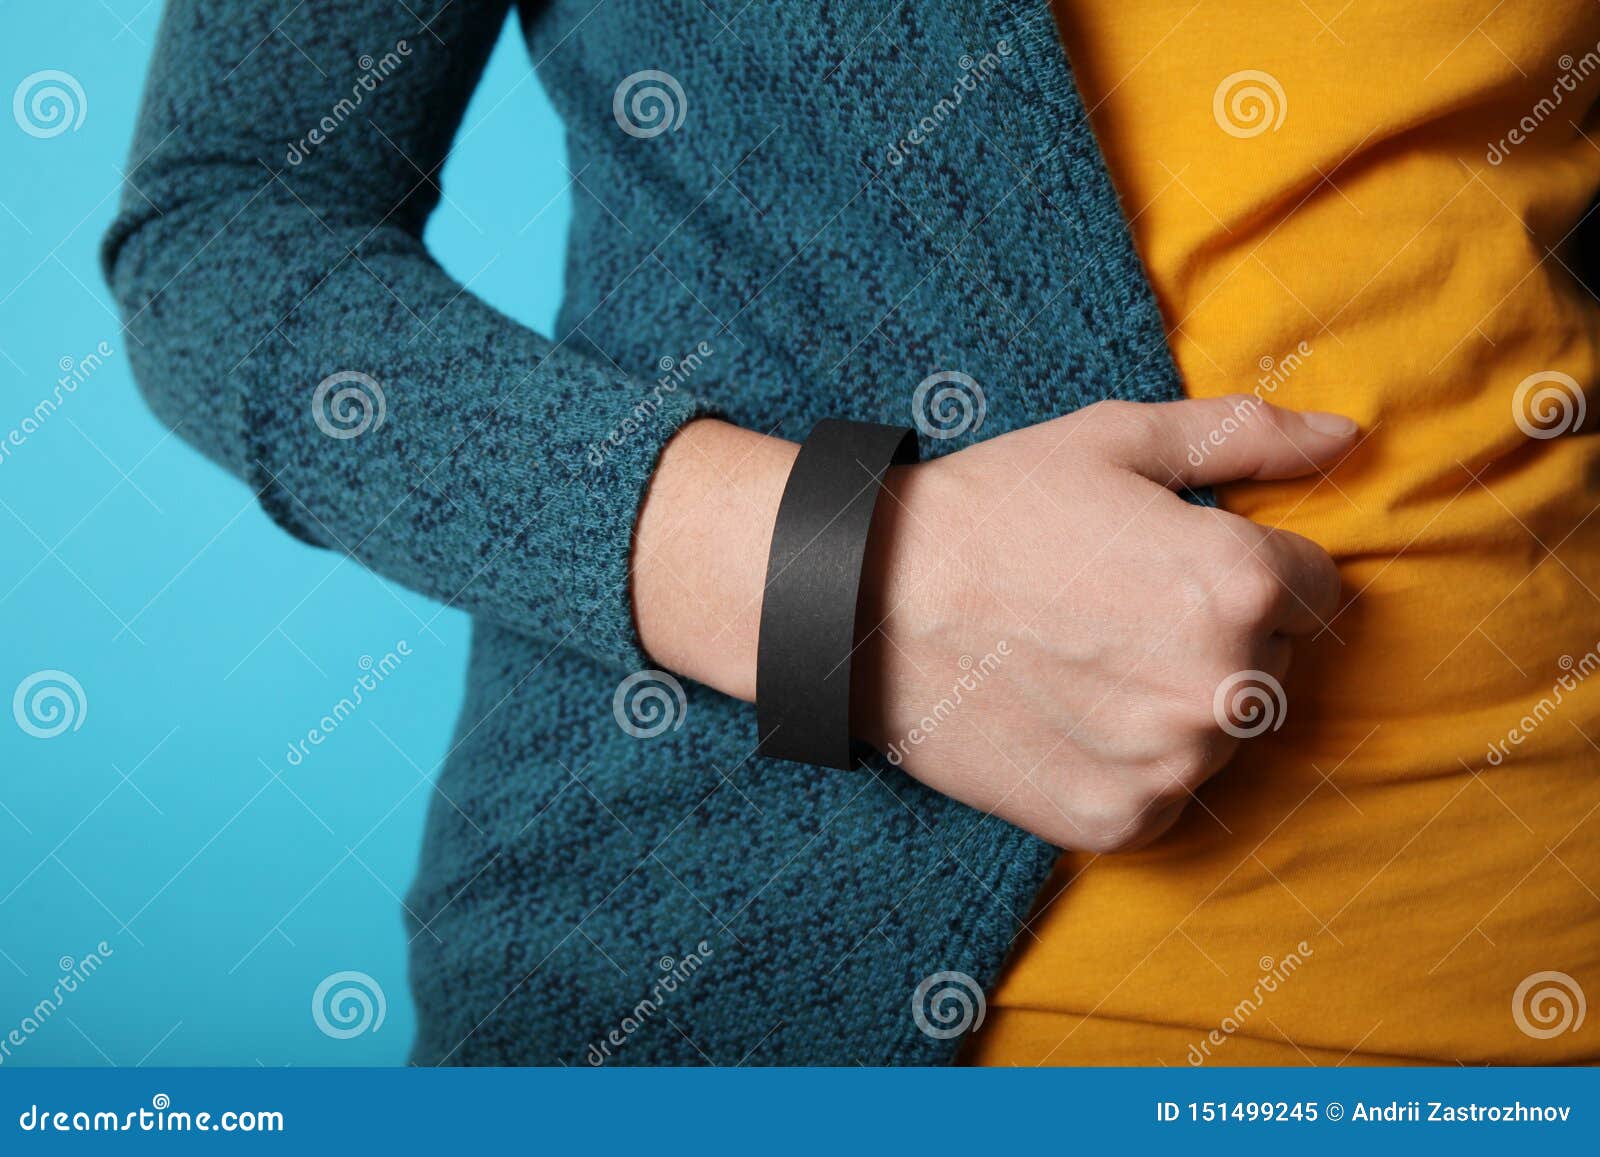 identification concert black bracelet template, hand hospital security wristband mockup